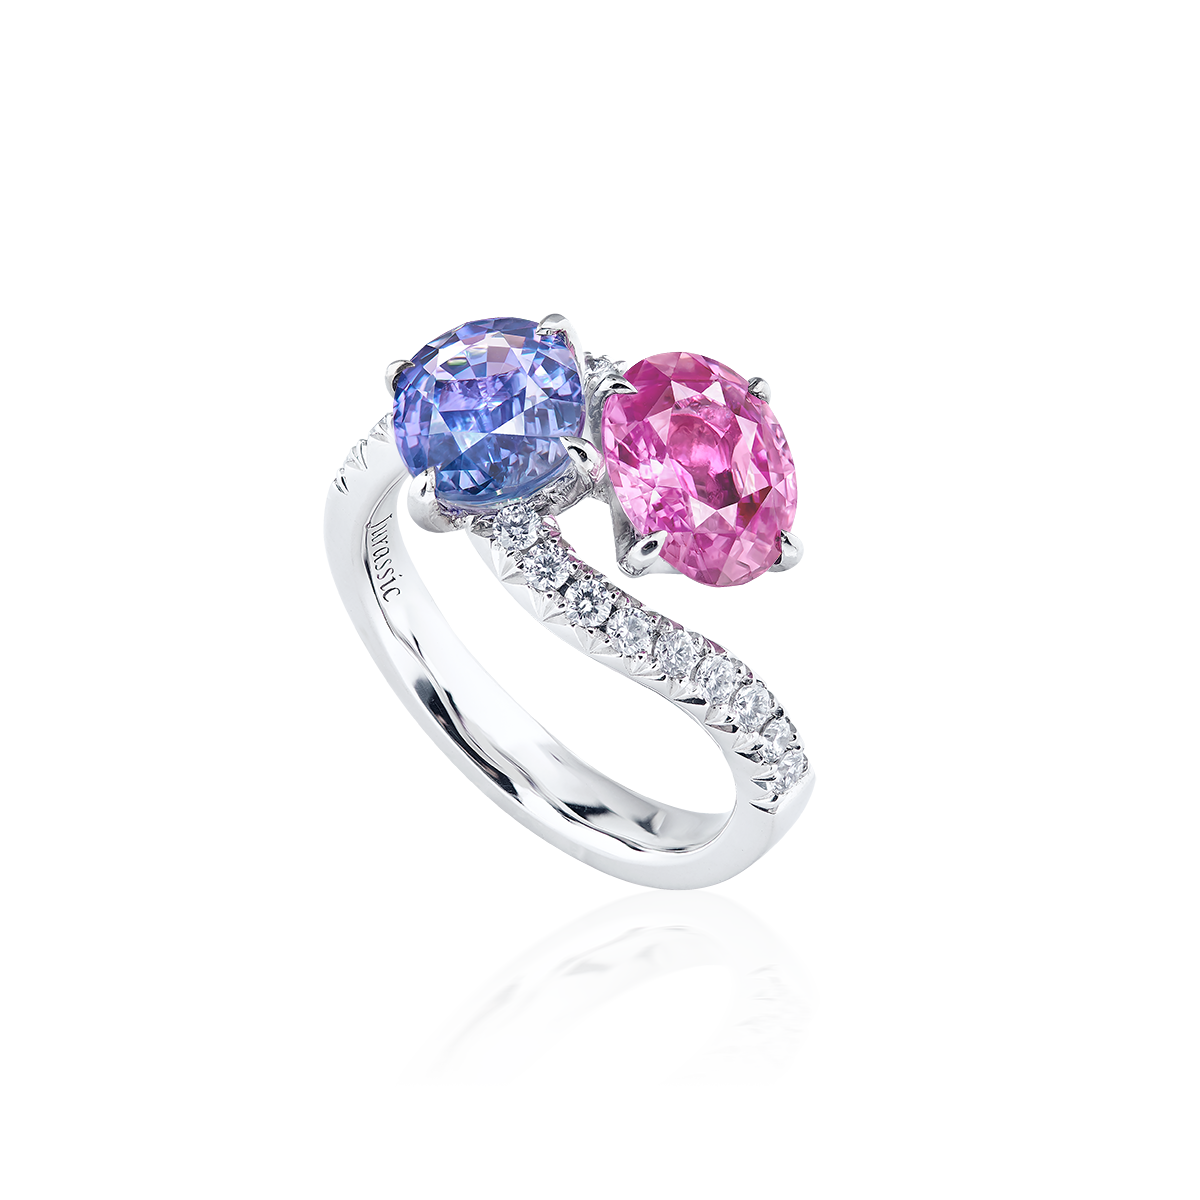 雙色彩剛'TOI ET MOI'鑽戒
Violet ＆ Pink Corundum 
and Diamond Ring